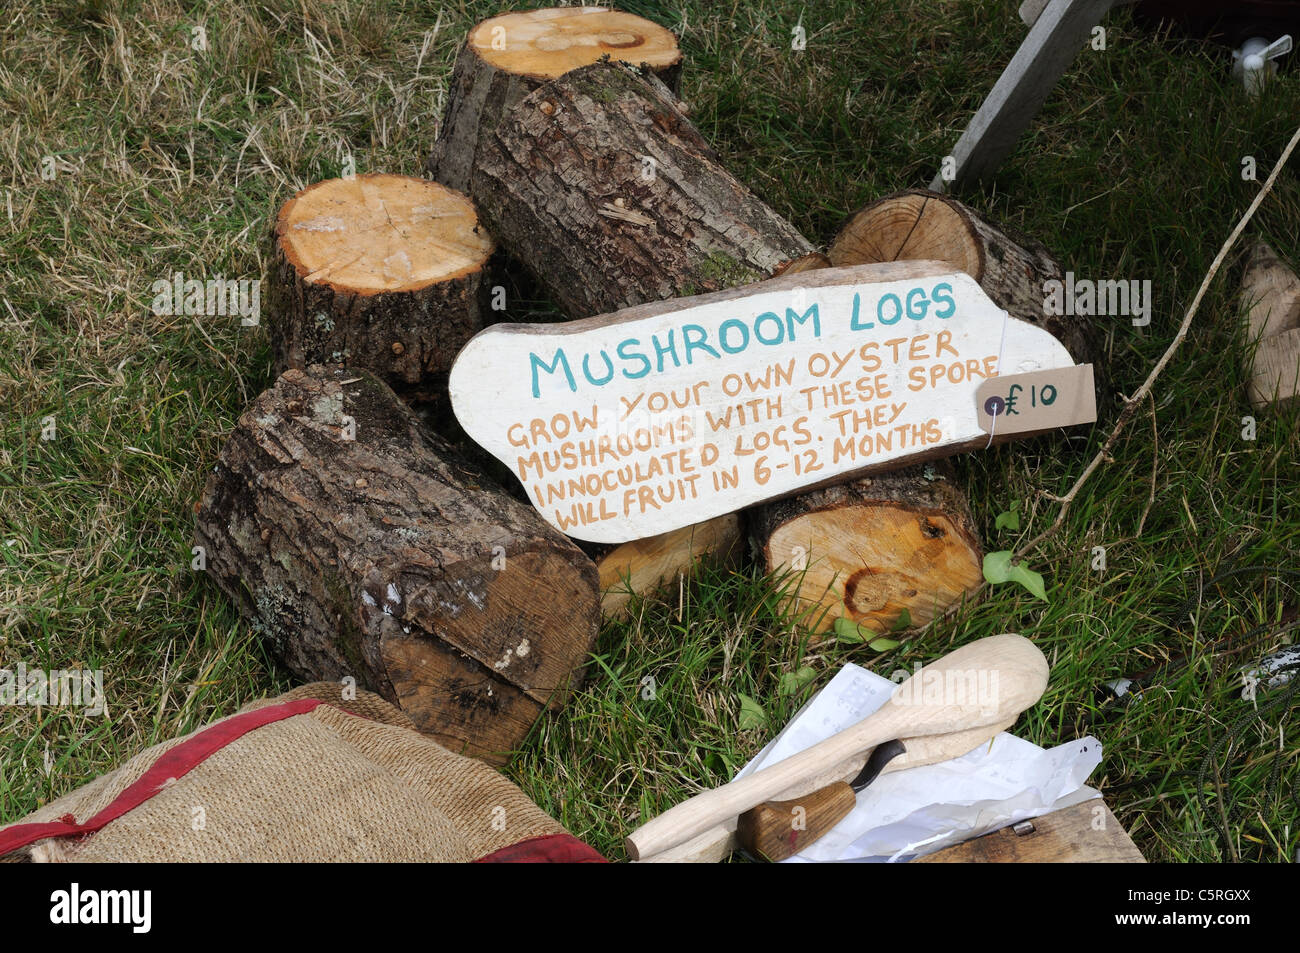 Logs inoculato oyster con spore di funghi in vendita Pembrokeshire Wales Cym ru UK GB Foto Stock